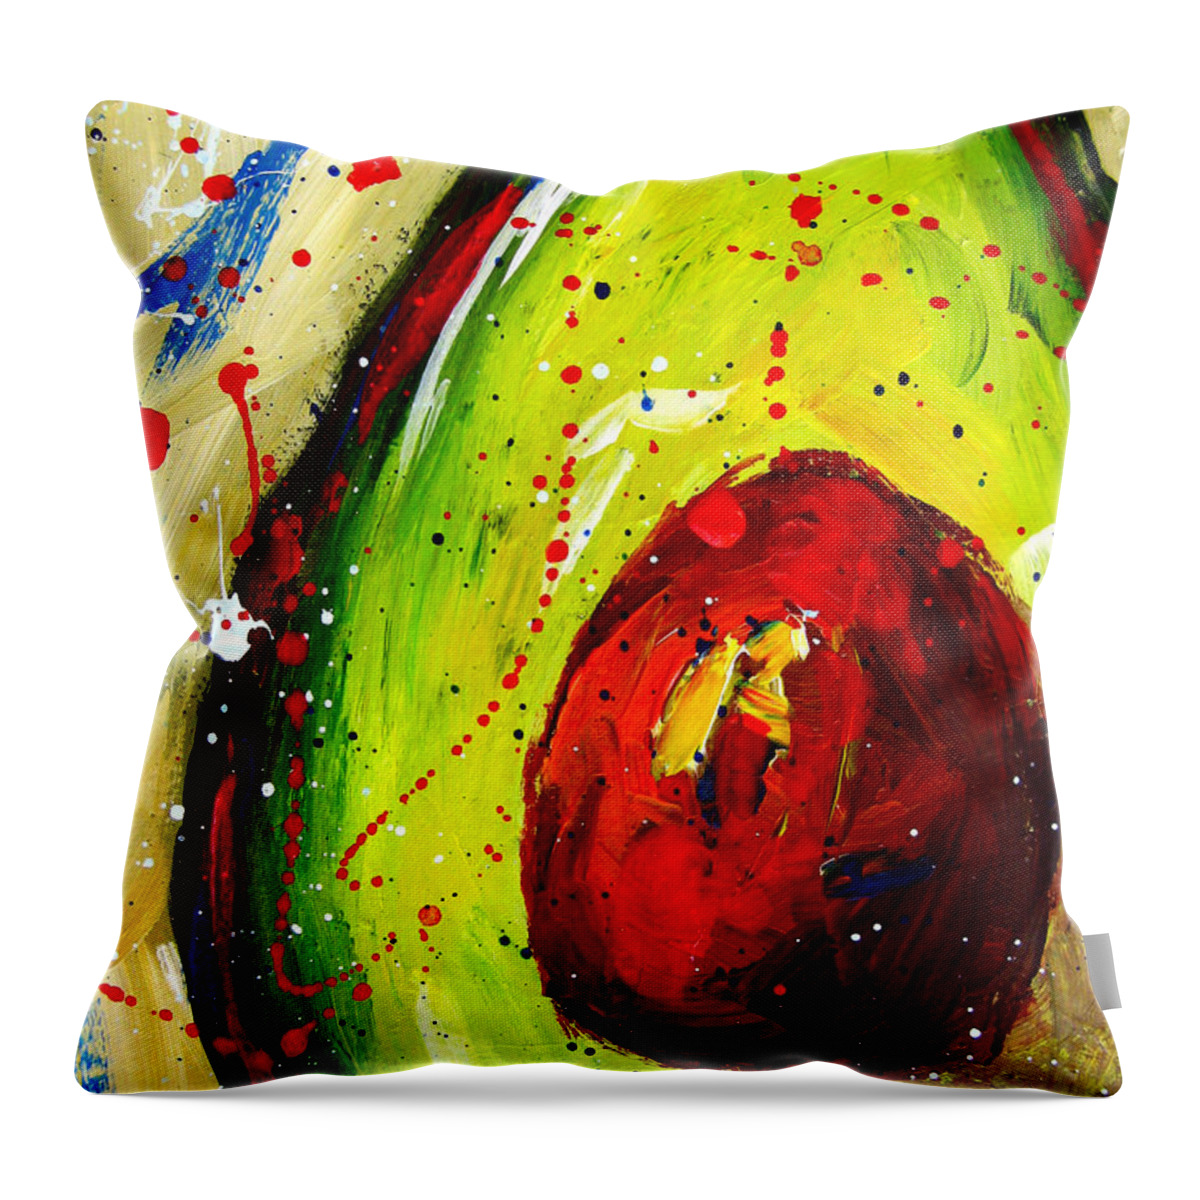 Modern Avocado Art Throw Pillow featuring the painting Crazy Avocado 2 - Modern Art by Patricia Awapara